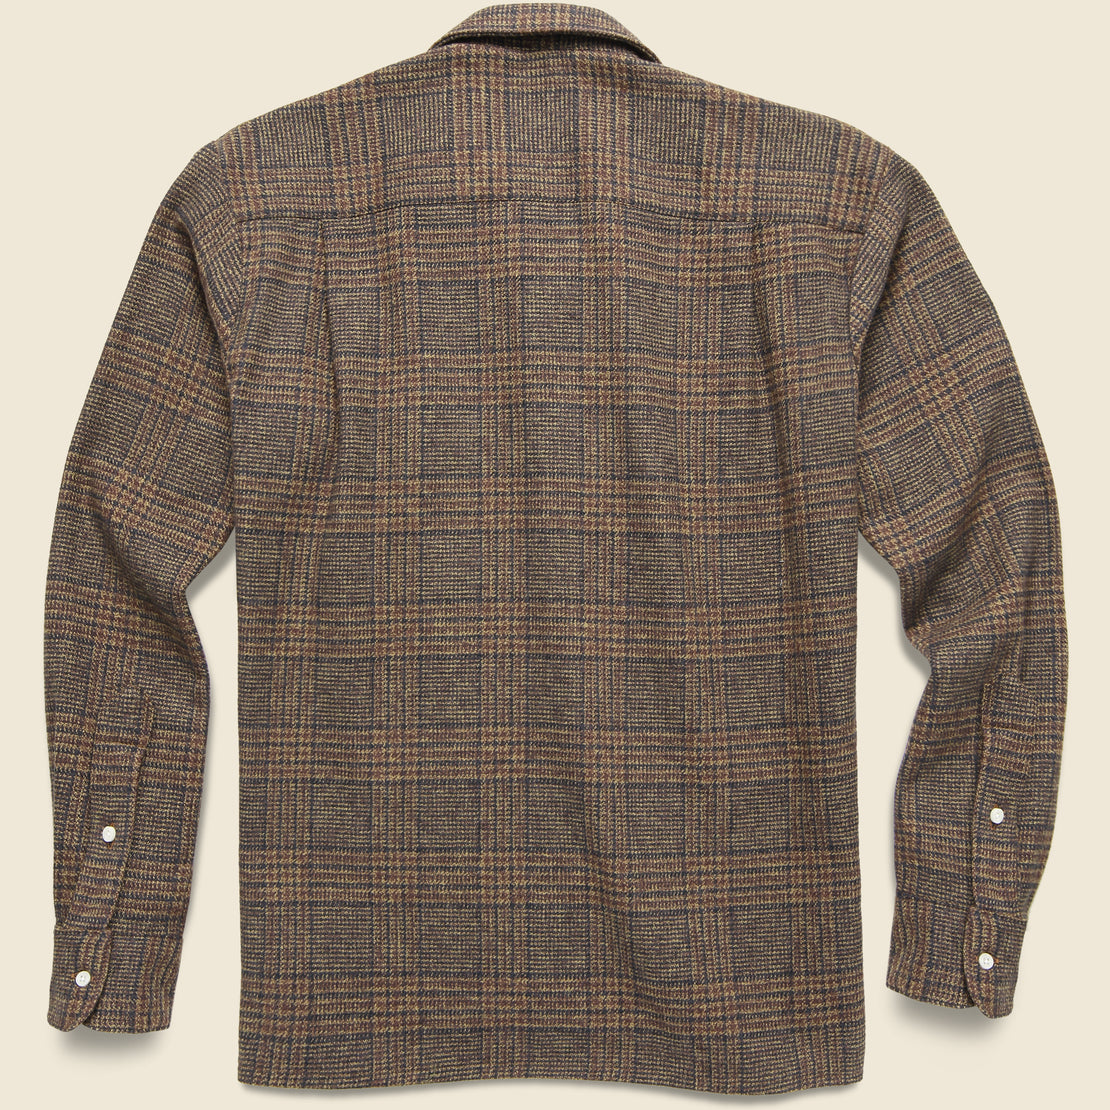 Cotton Tweed Check Shirt - Tan - Gitman Vintage - STAG Provisions - Tops - L/S Woven - Plaid